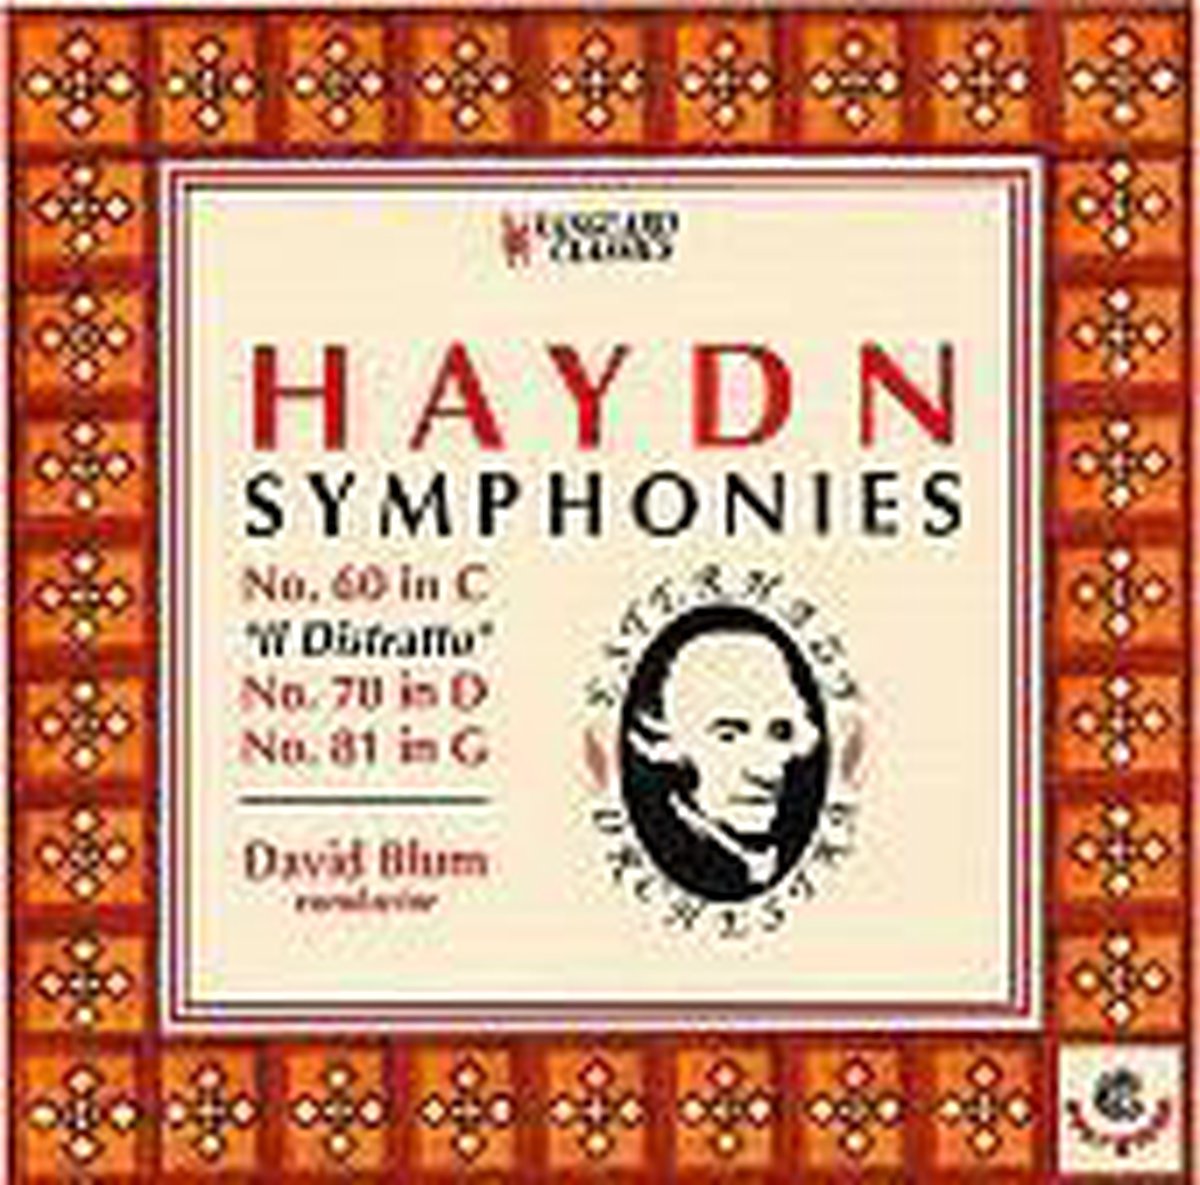 Haydn: Symphonies 60, 70, 81 - David Blum